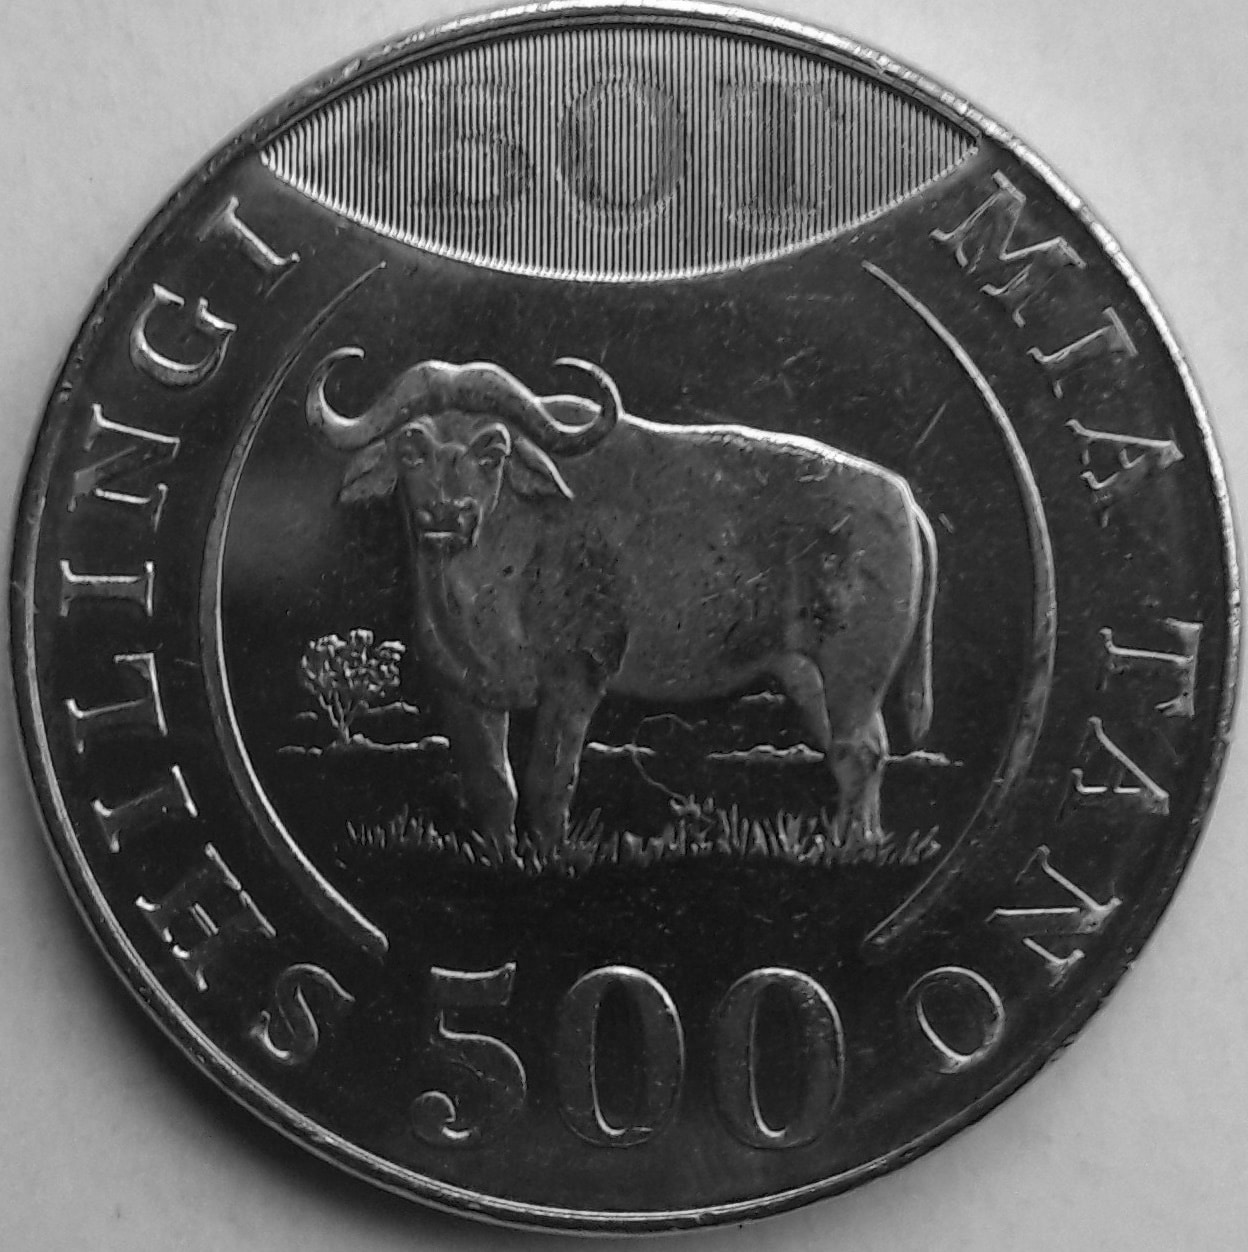 Tanzania 500 shilling coin back